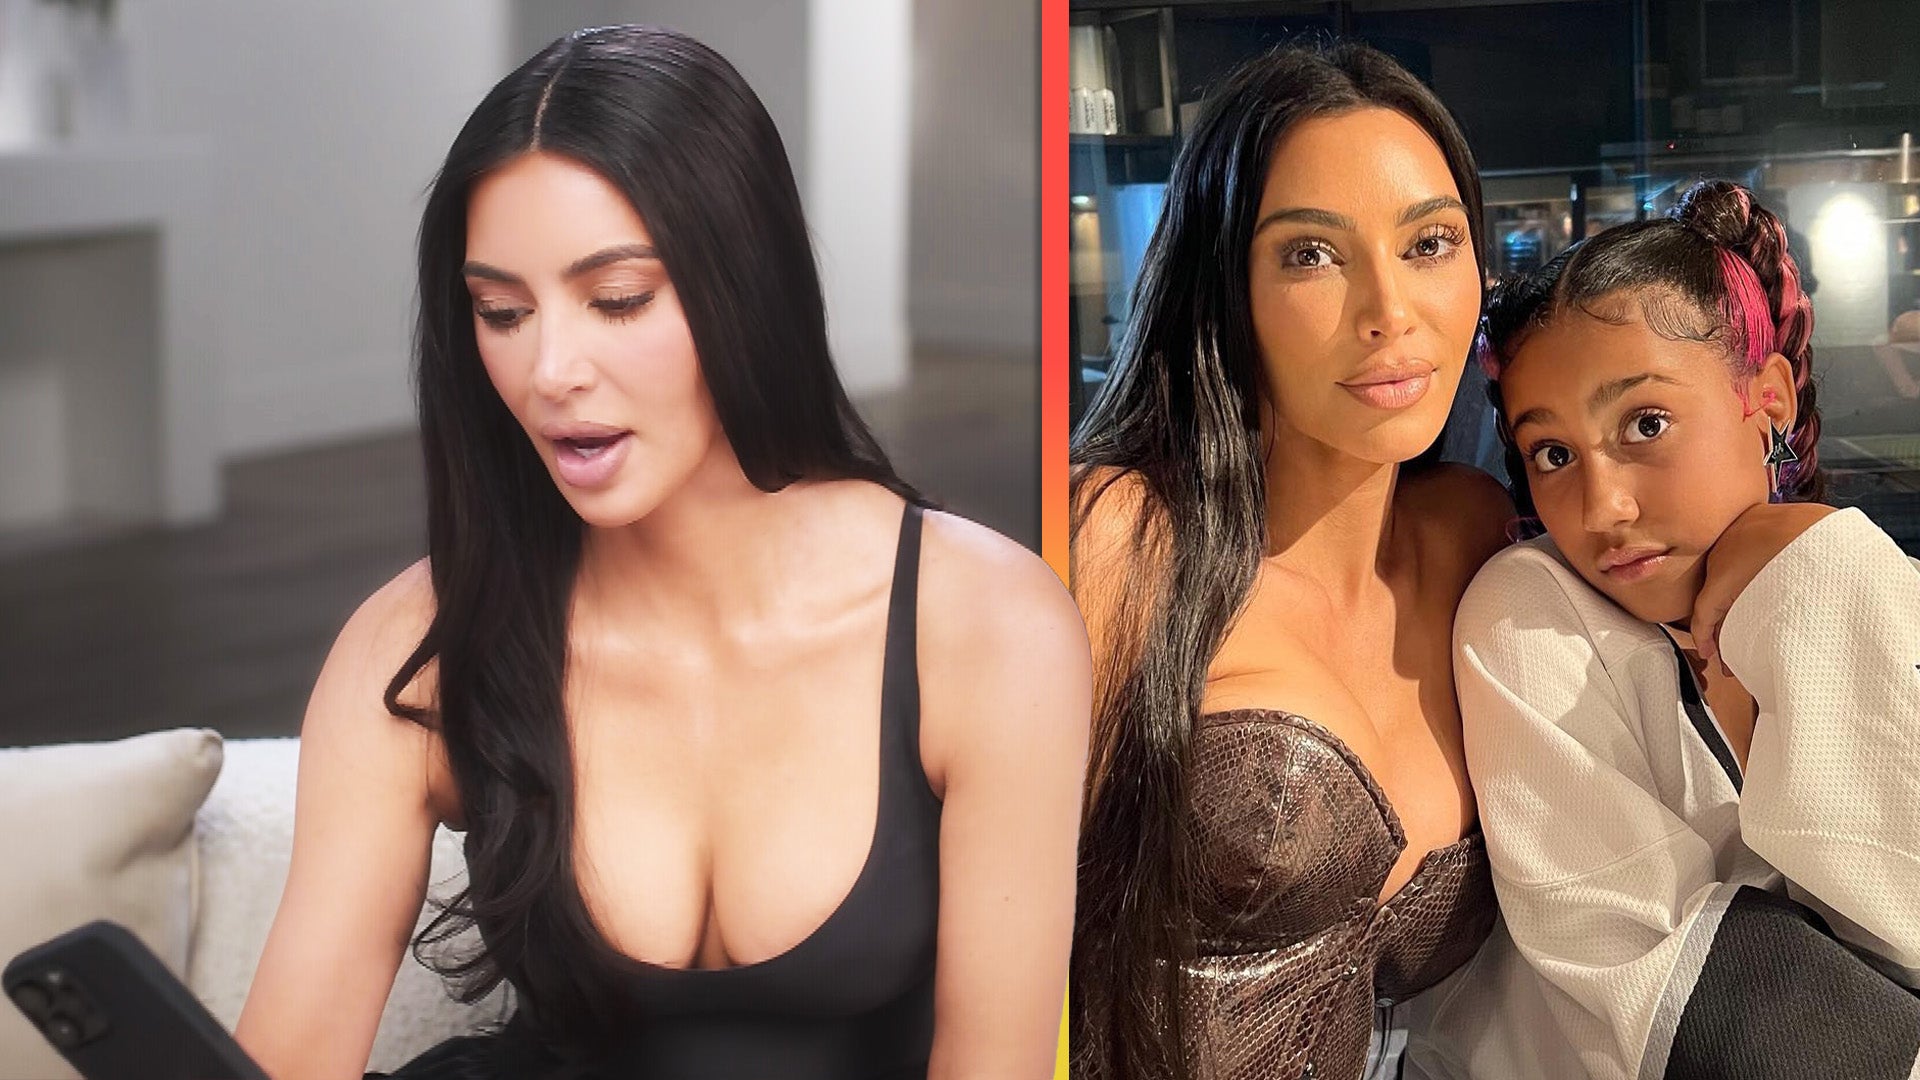 Watch North West Hang Up on Mom Kim Kardashian for Misusing Slang Word